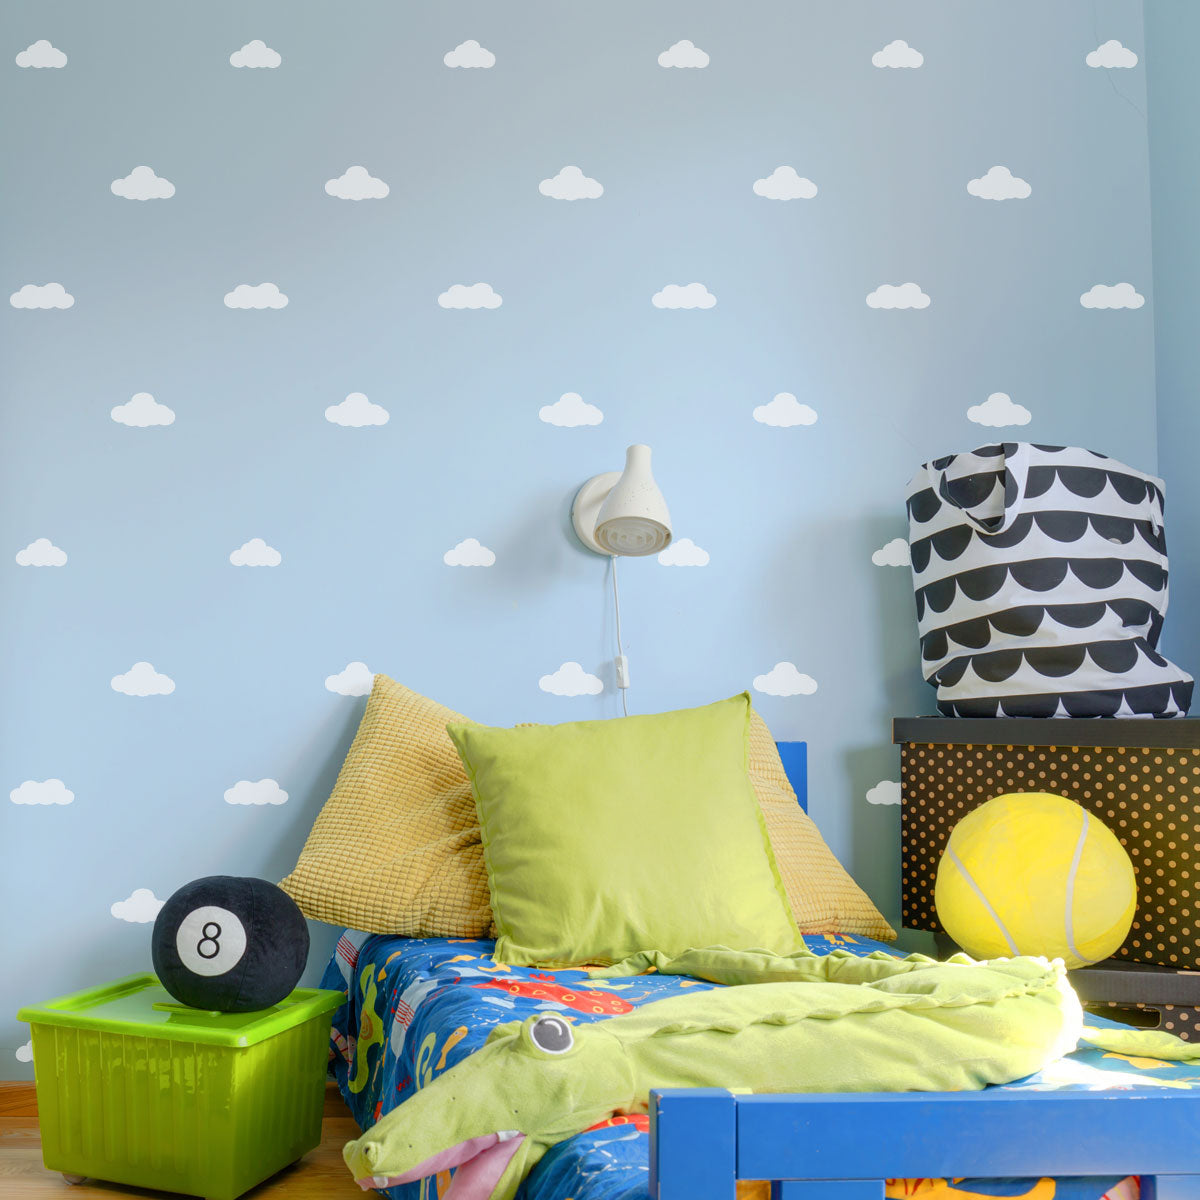 CraftStar Clouds Stencil Set in Boys Bedroom